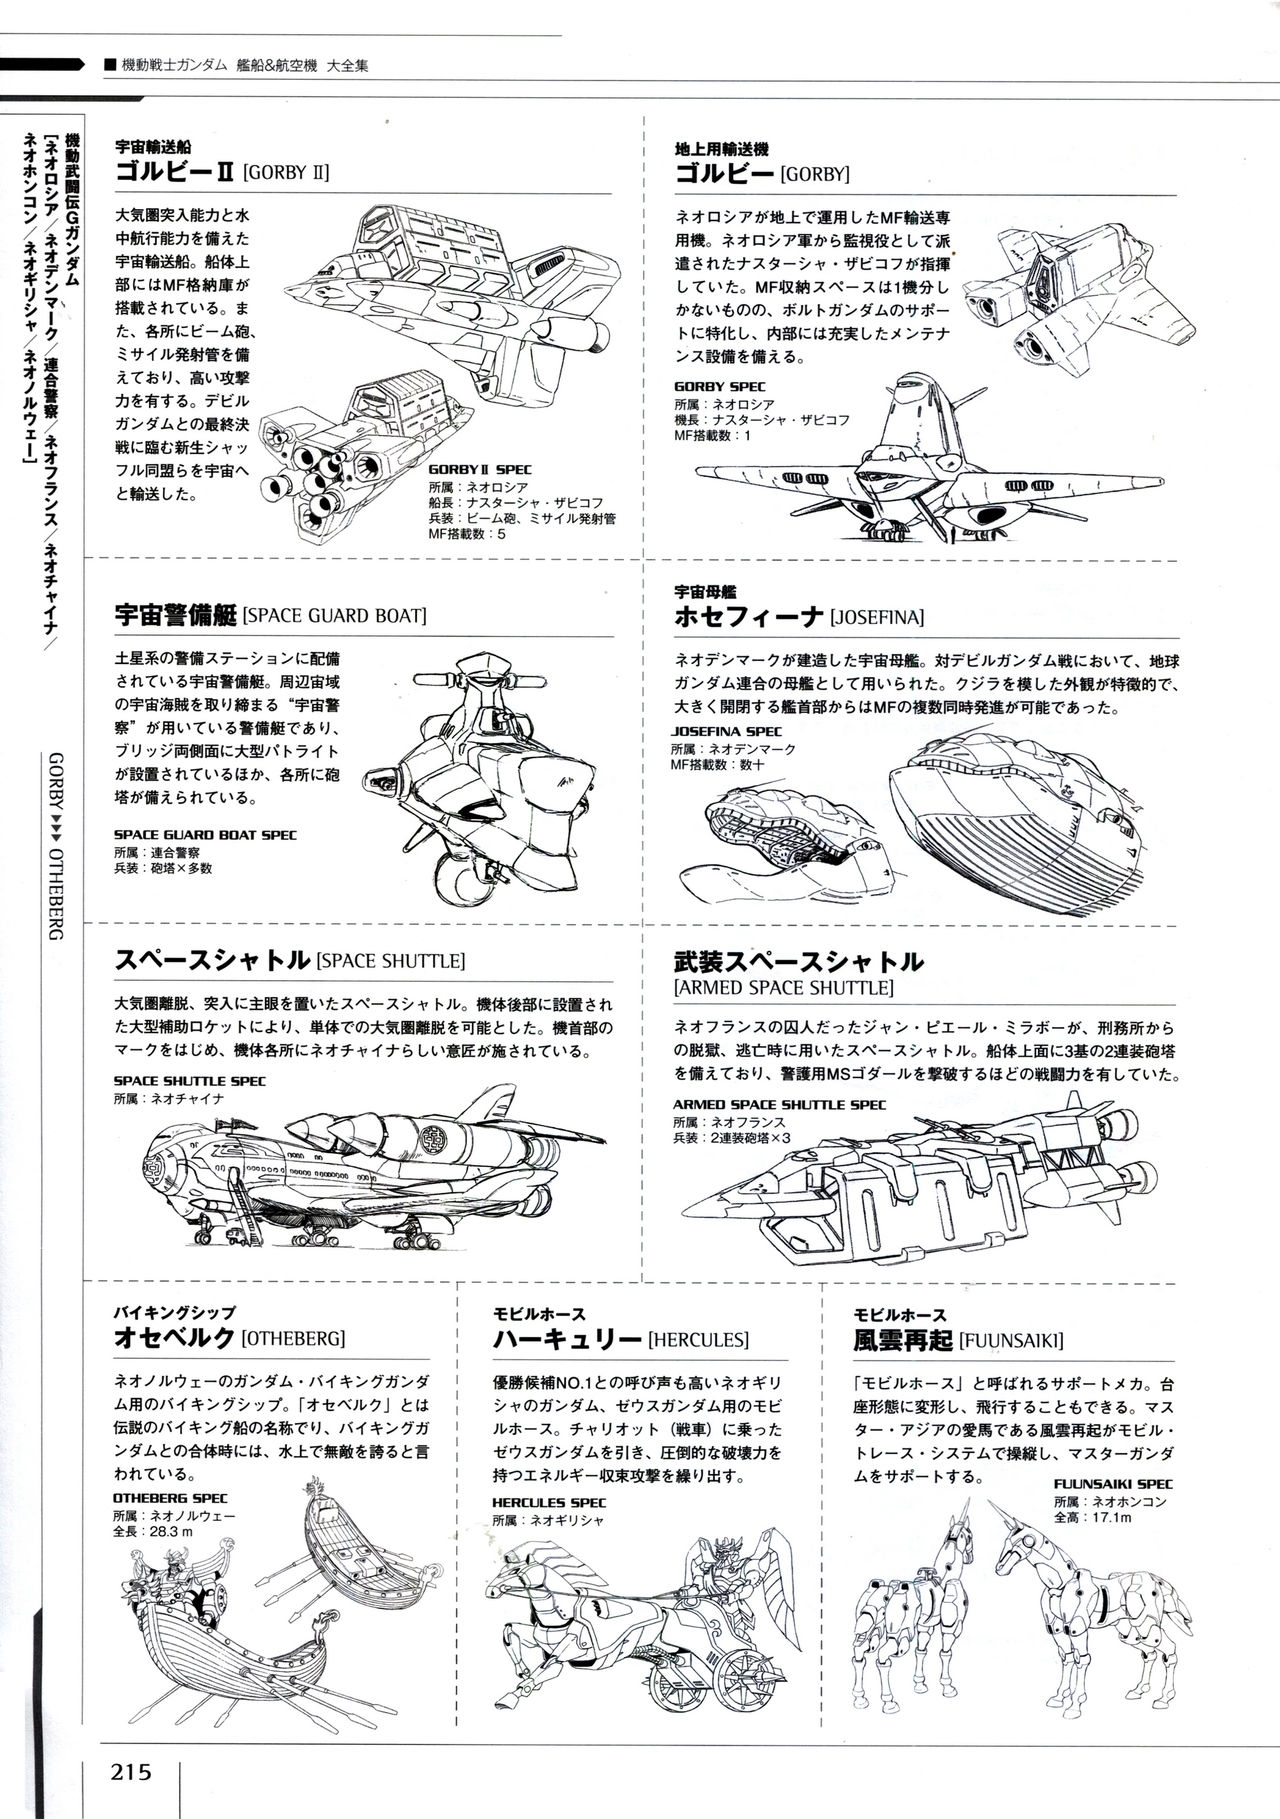 Mobile Suit Gundam - Ship & Aerospace Plane Encyclopedia - Revised Edition 220